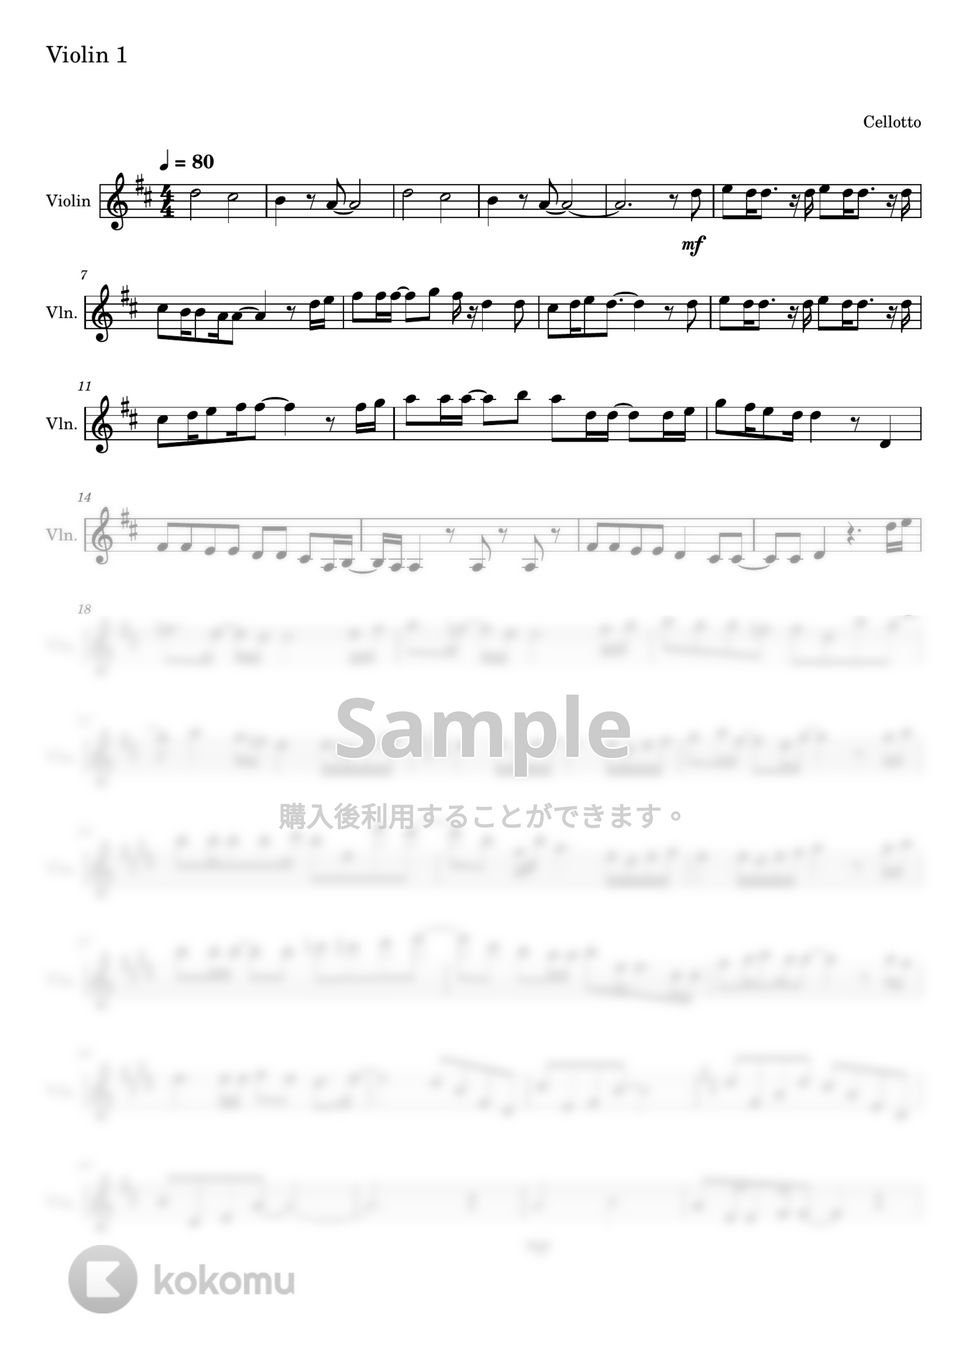 LiSA - 炎 (ヴァイオリン1 / 弦楽四重奏) by Cellotto